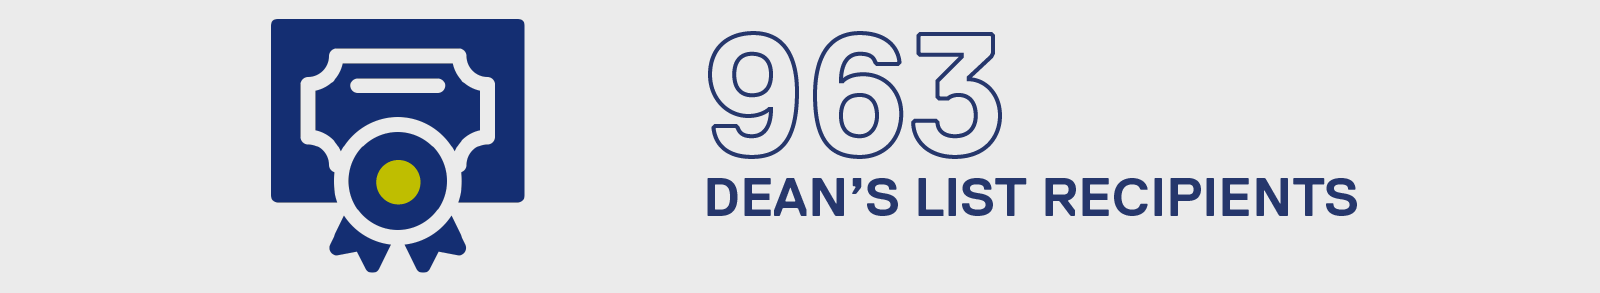 963 deans list recipients